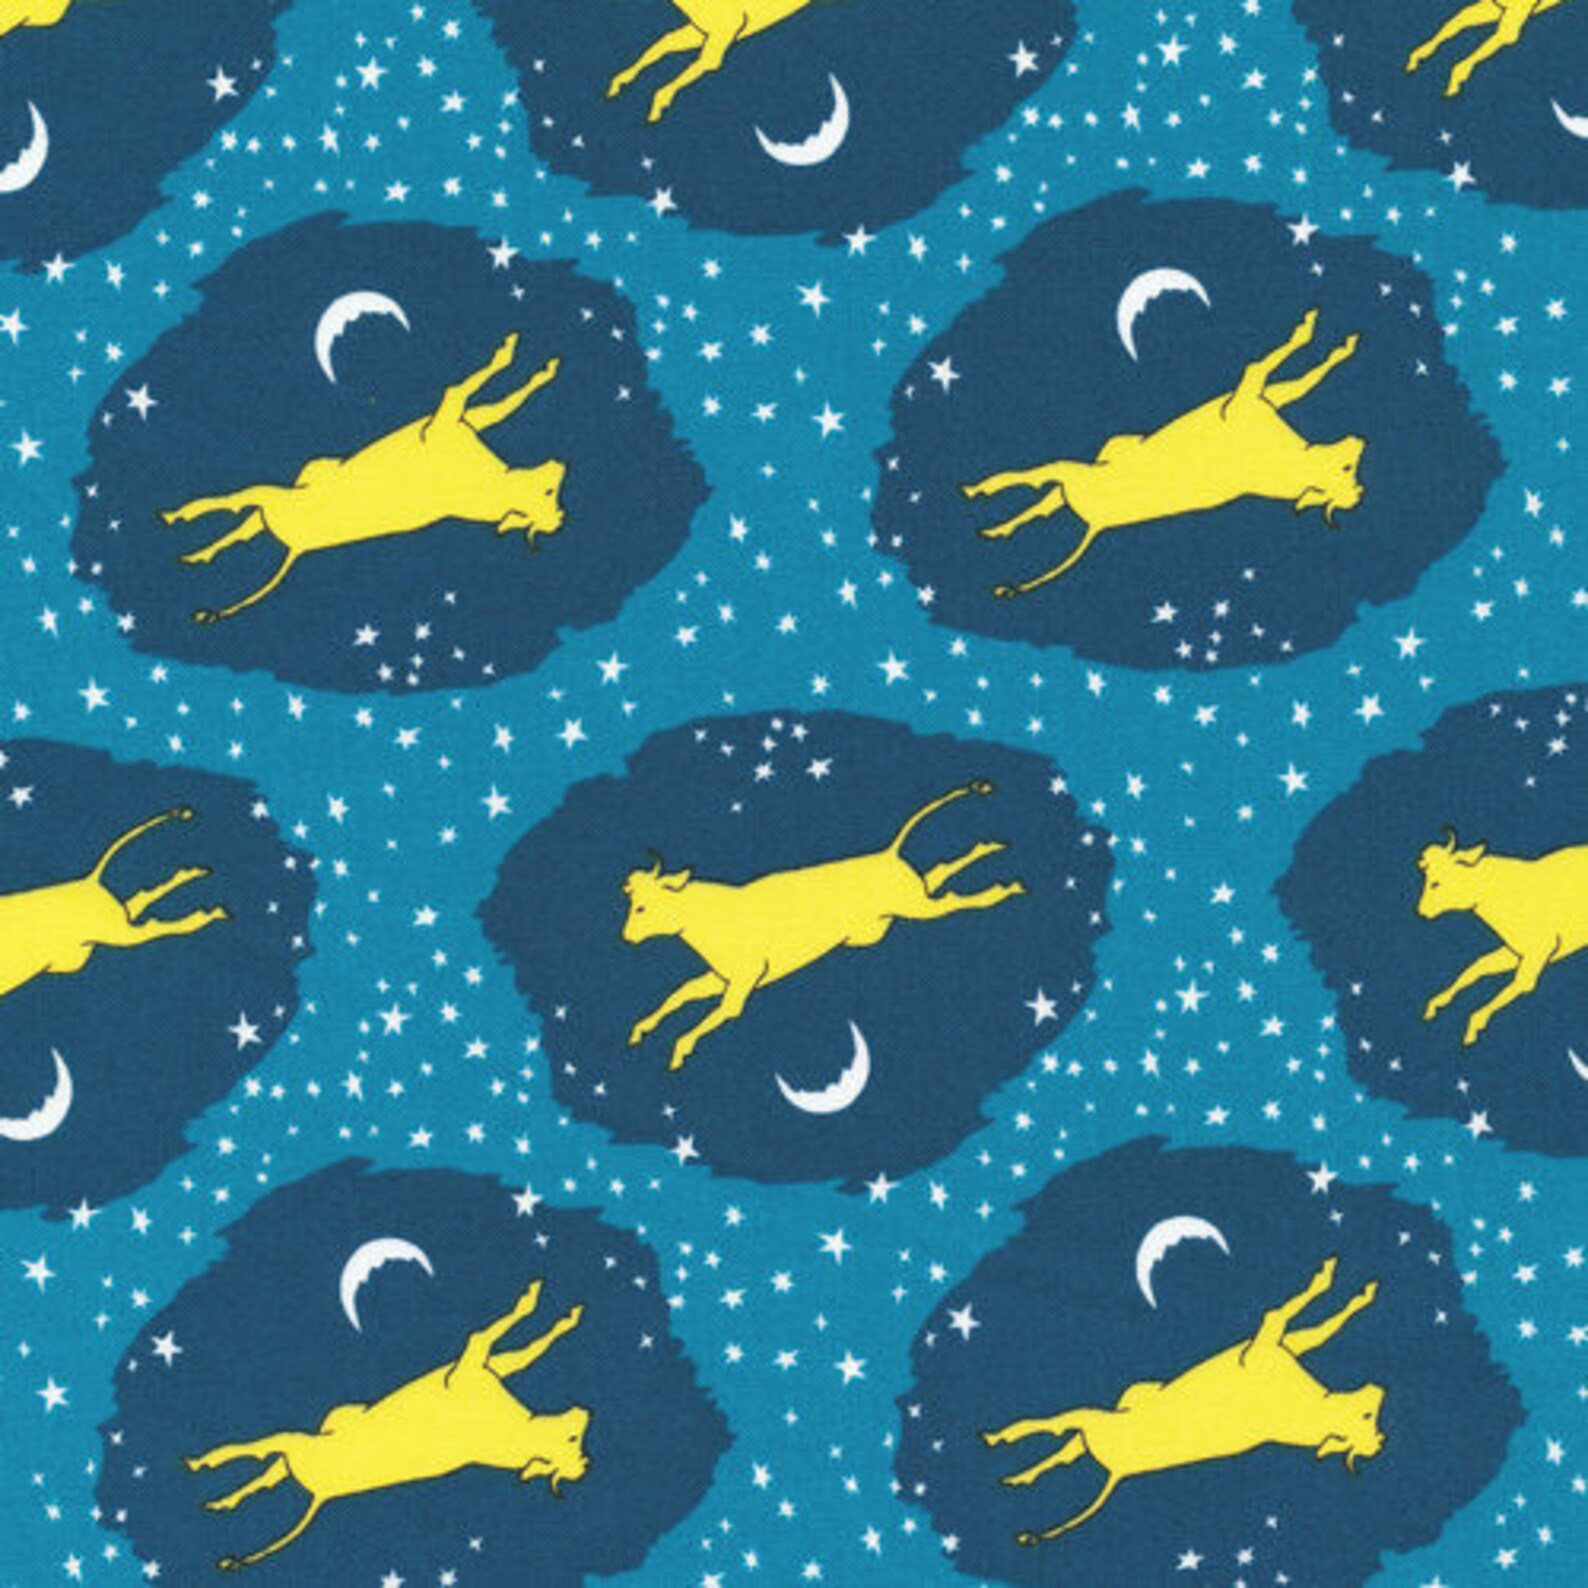 Goodnight Moon Over The Moon Character Teddy Bear Novelty | Etsy